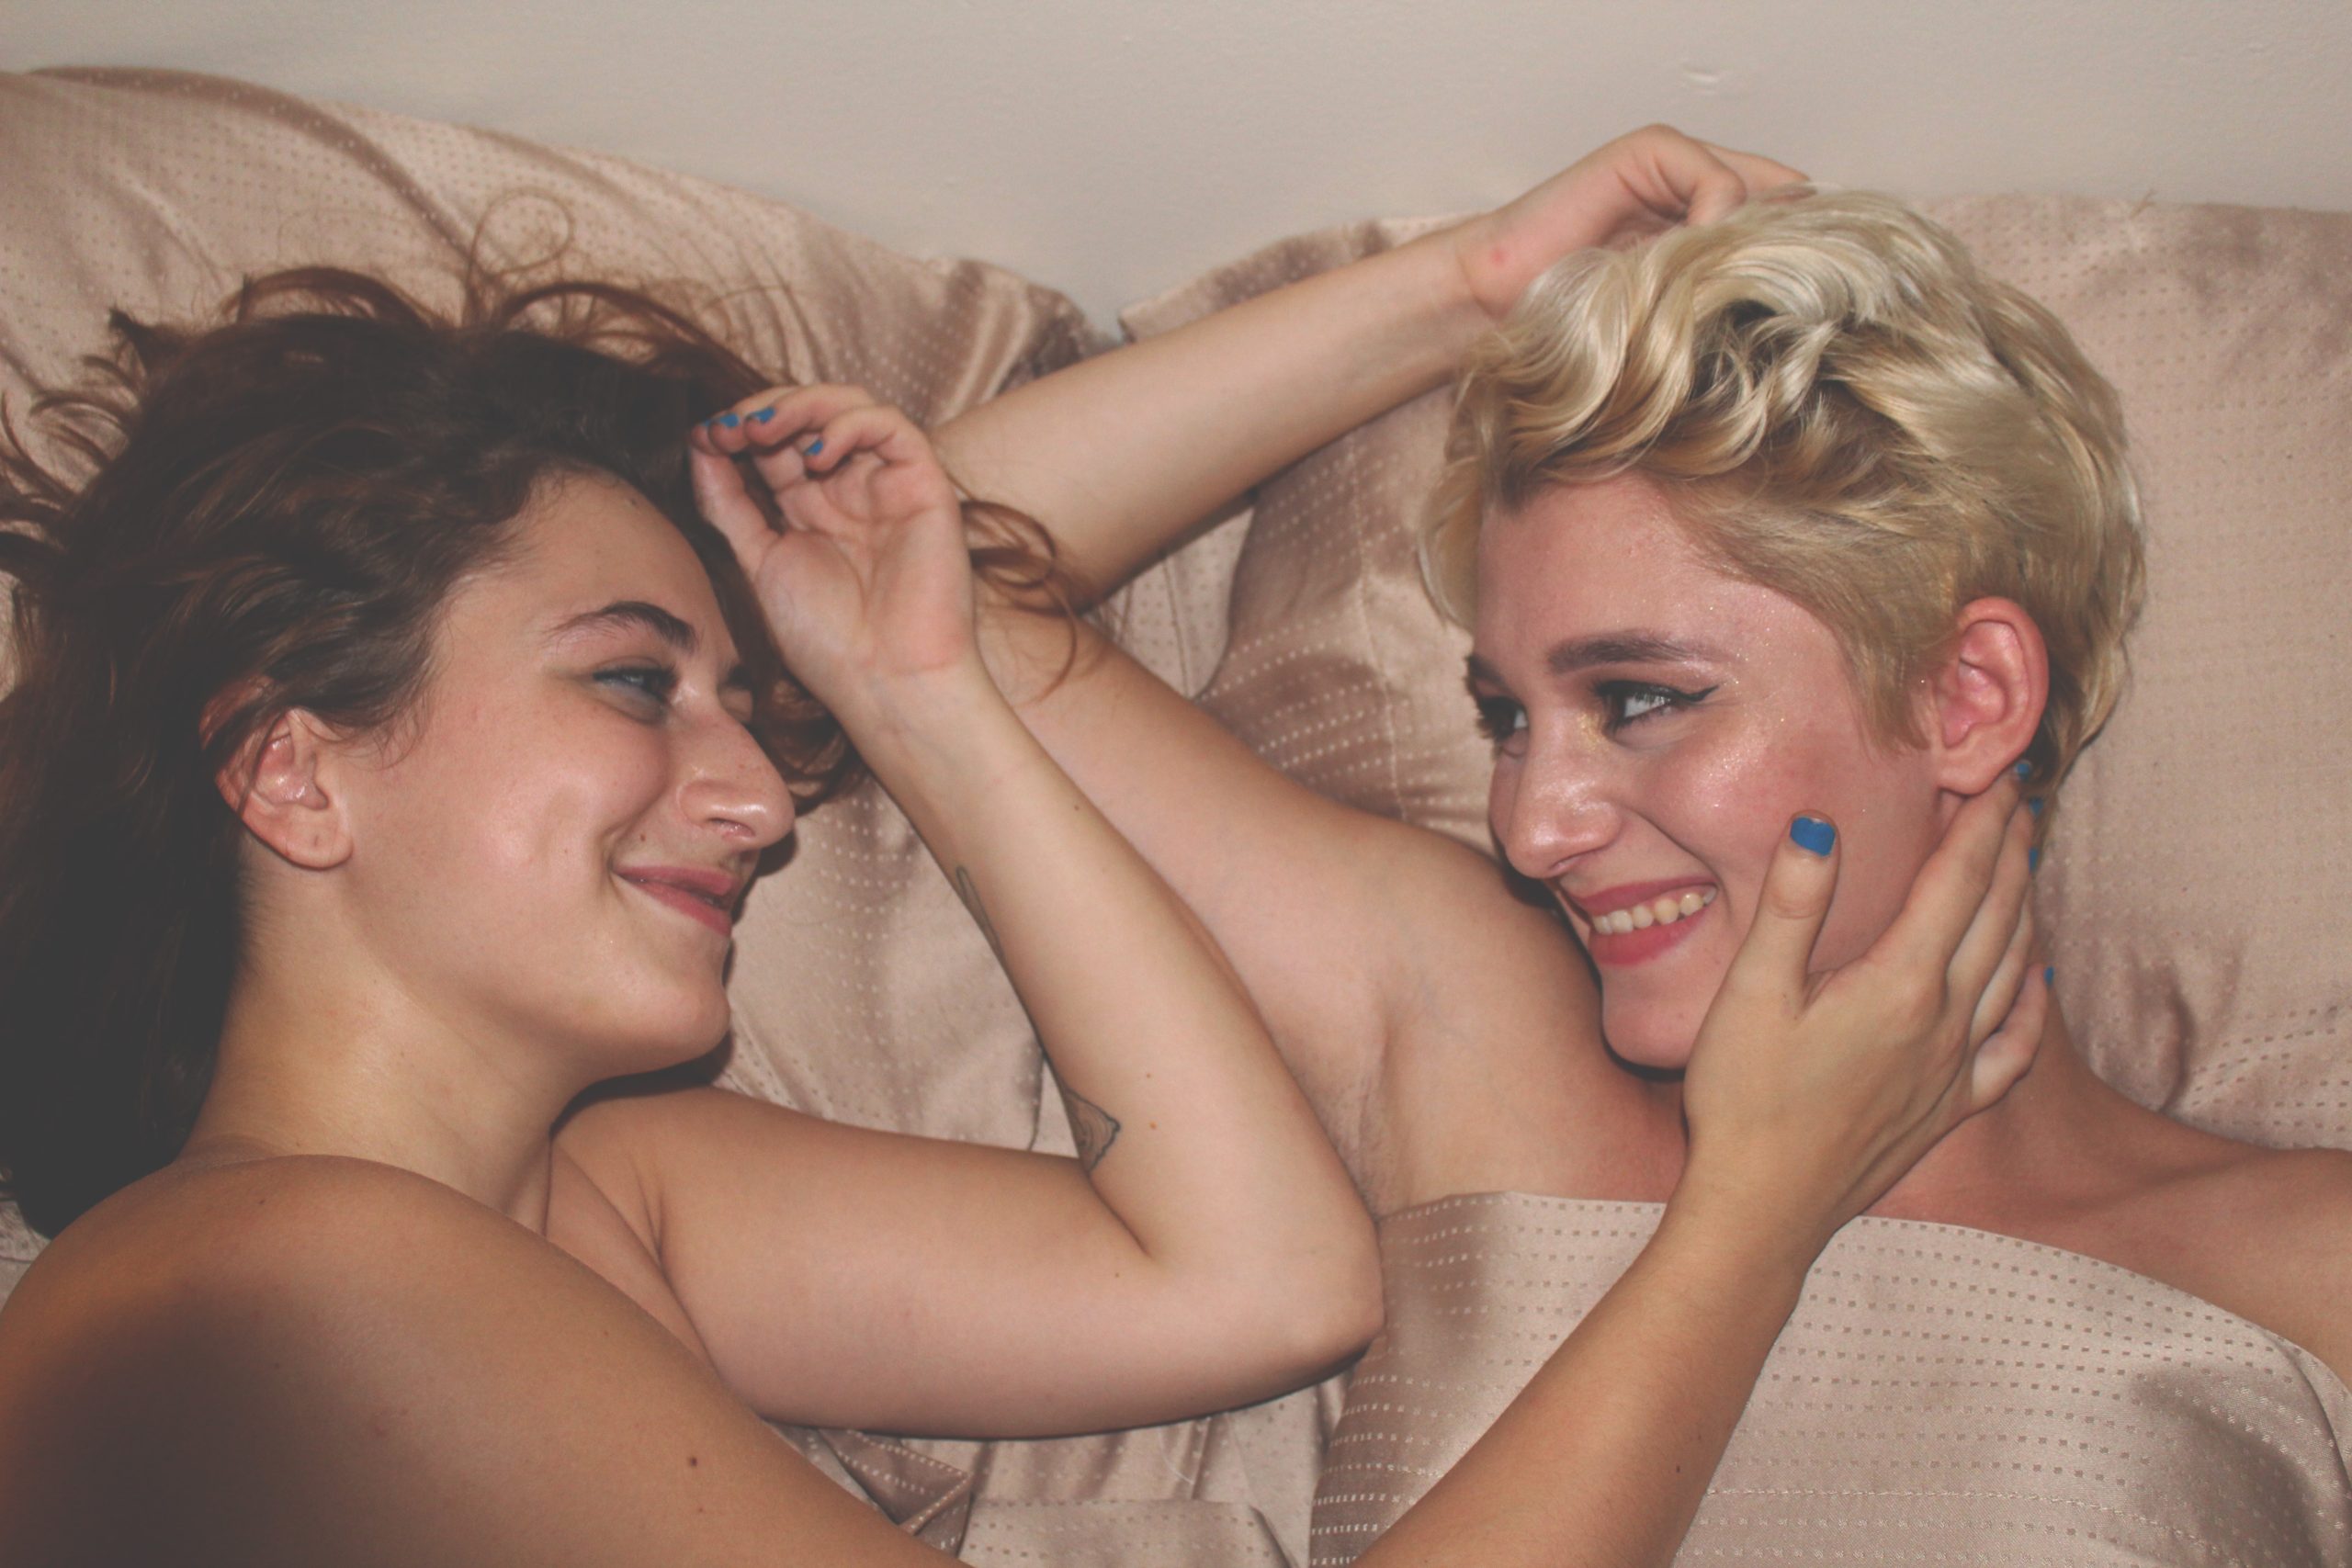 girls friends with benefits lesbians hook-up